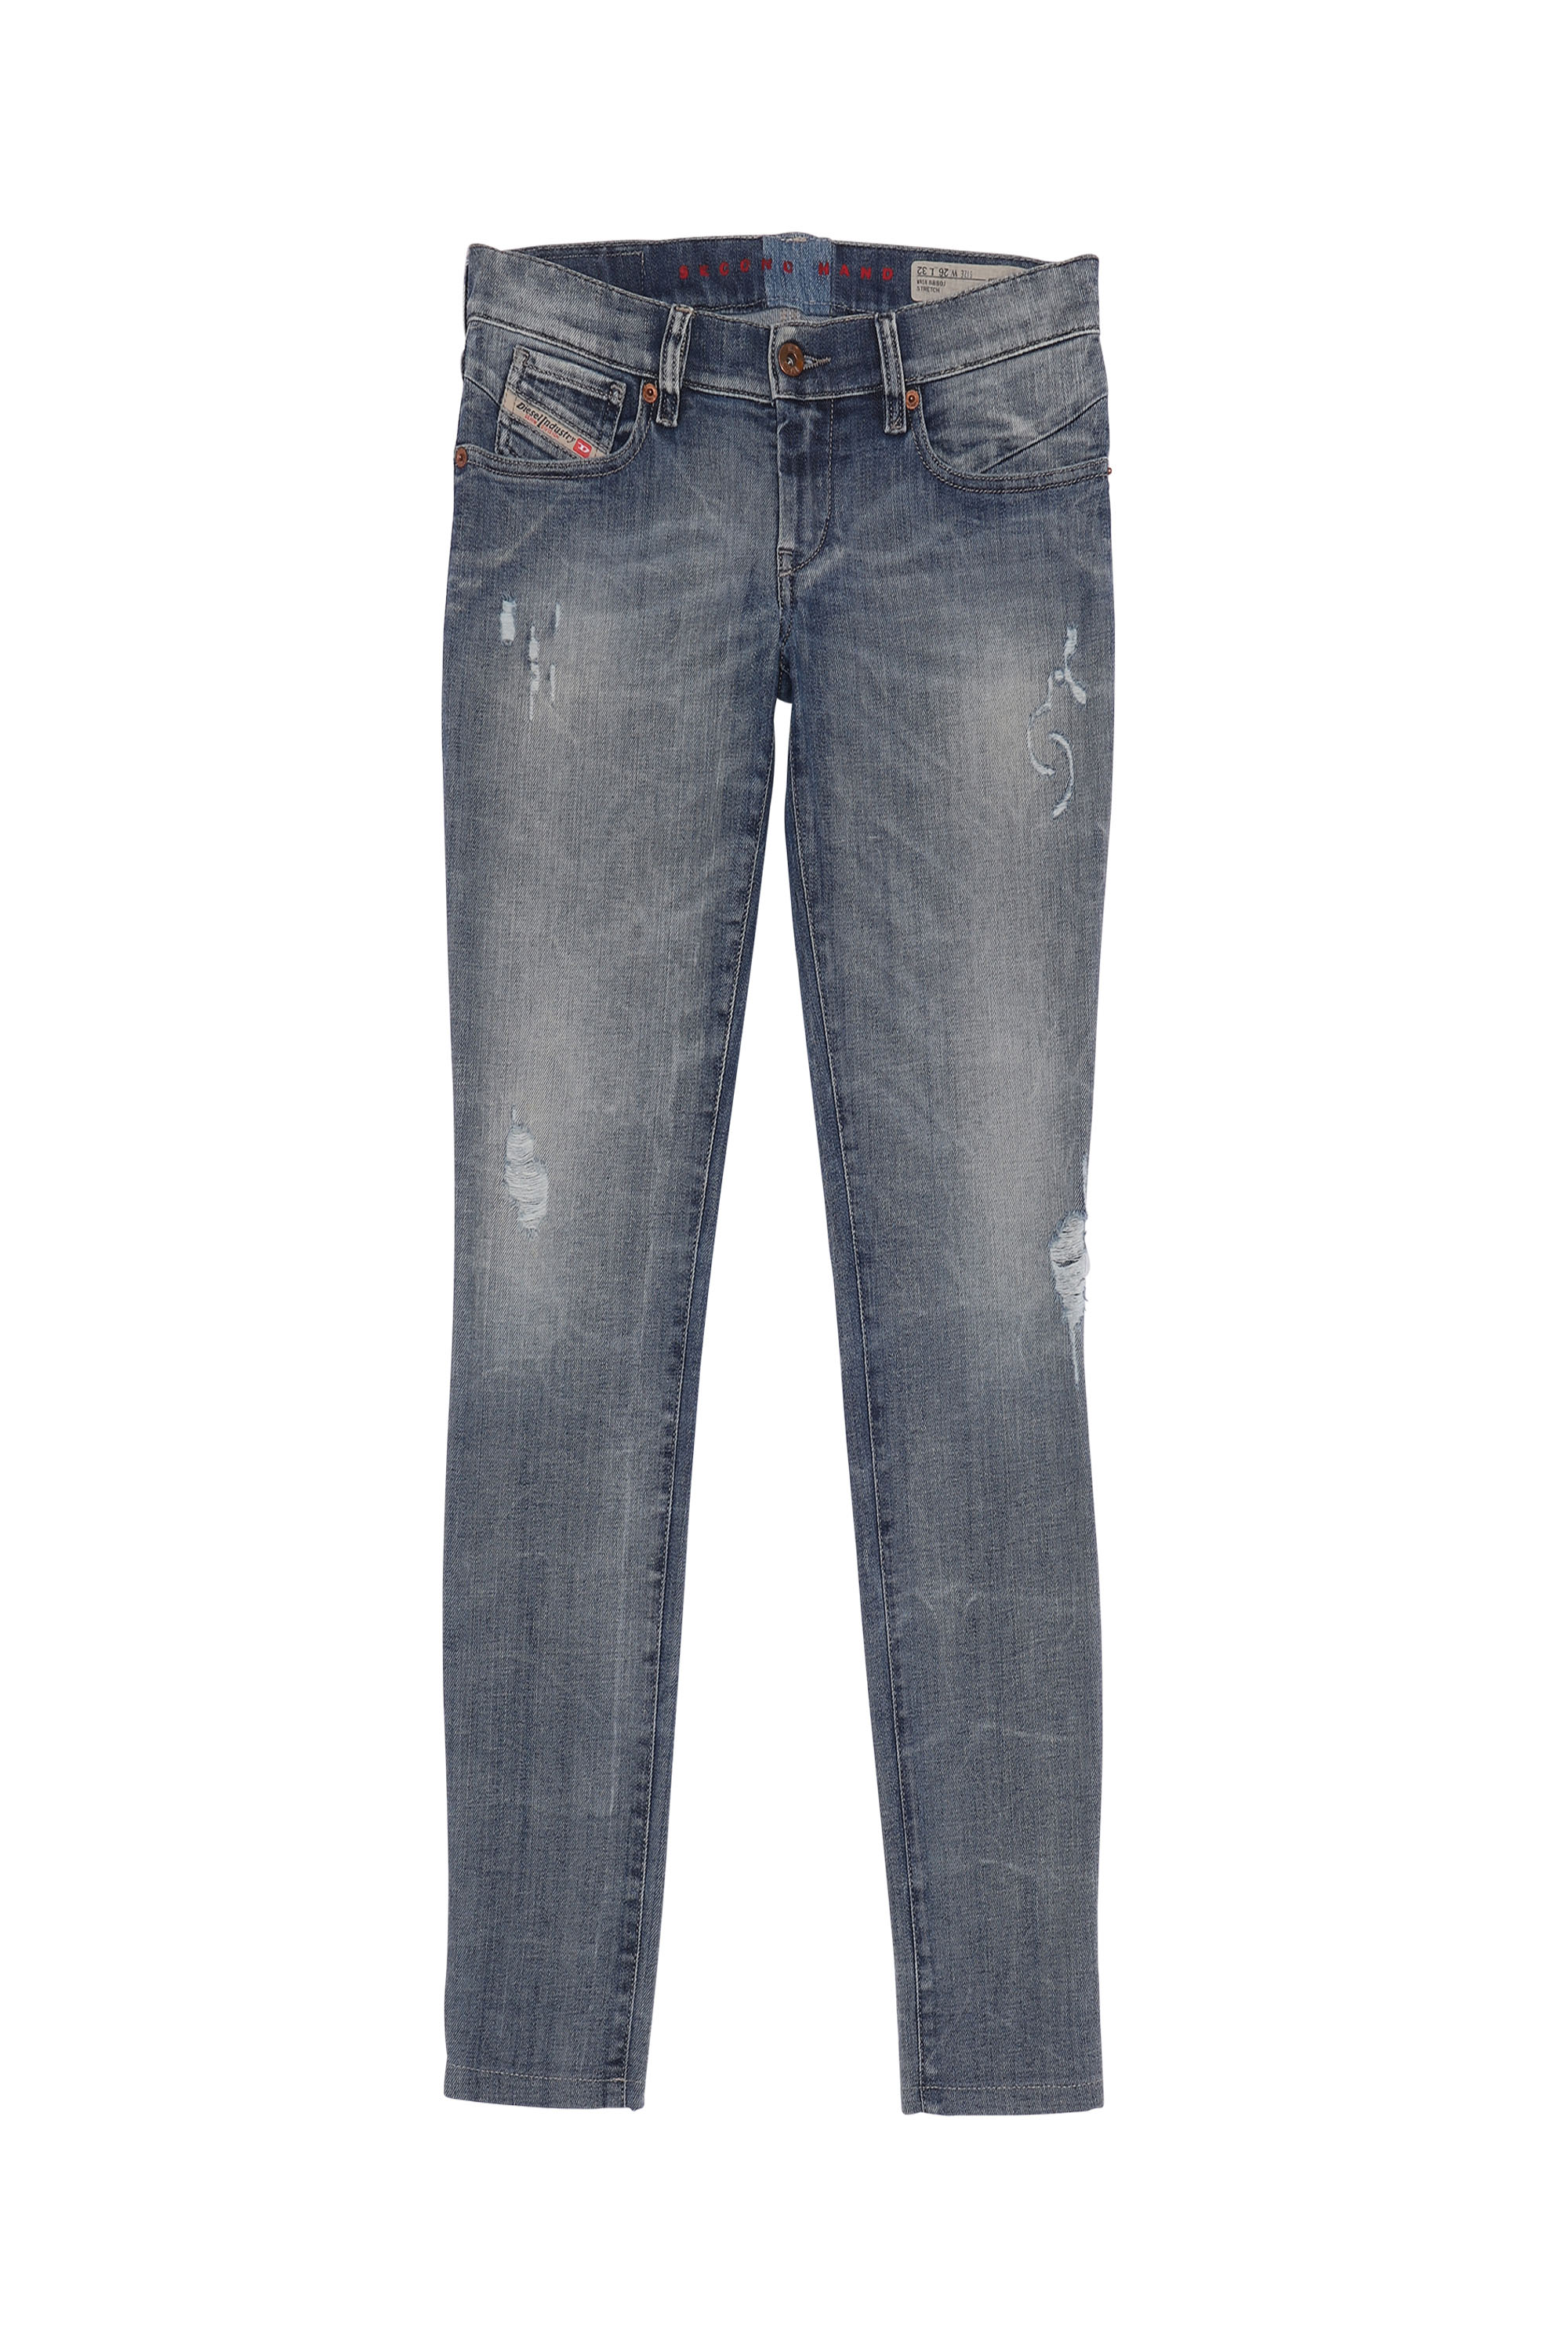 GETLEGG, Medium blue - Jeans